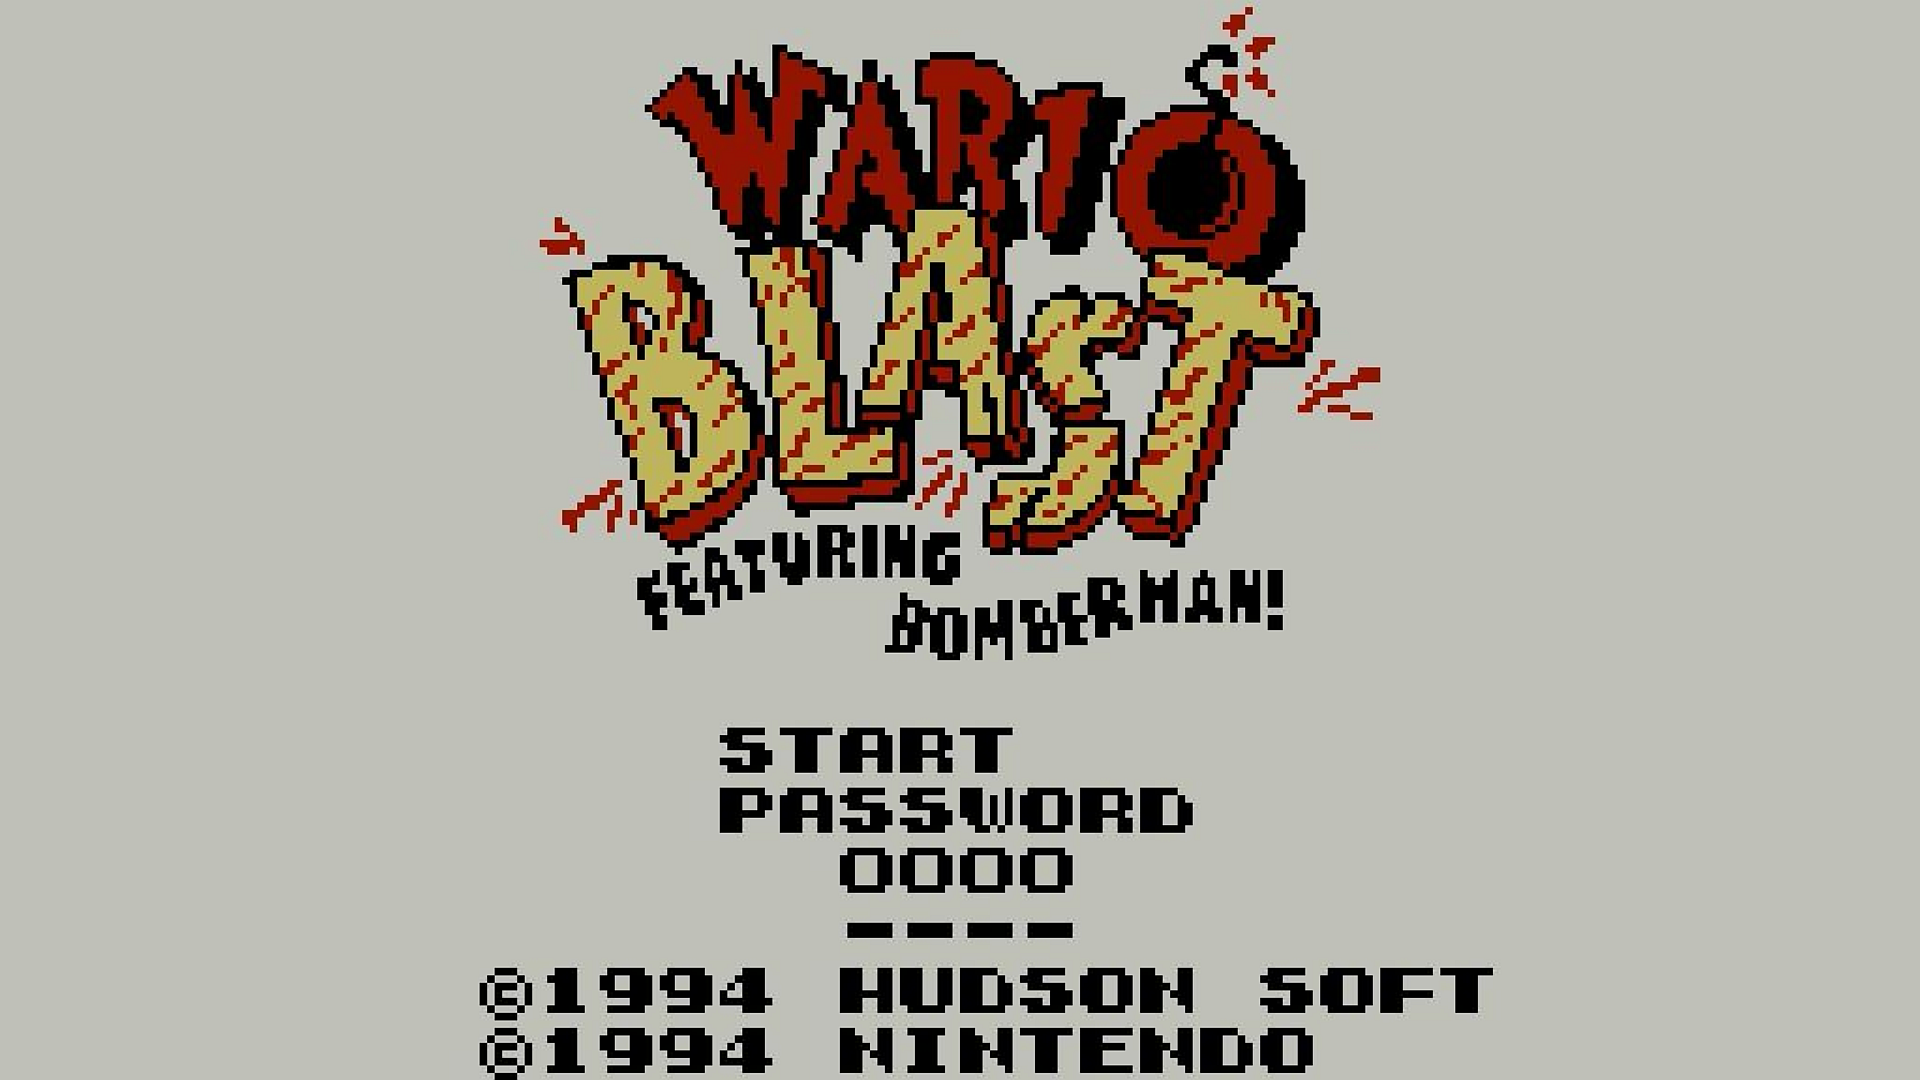 Wario Blast featuring Bomberman Logo